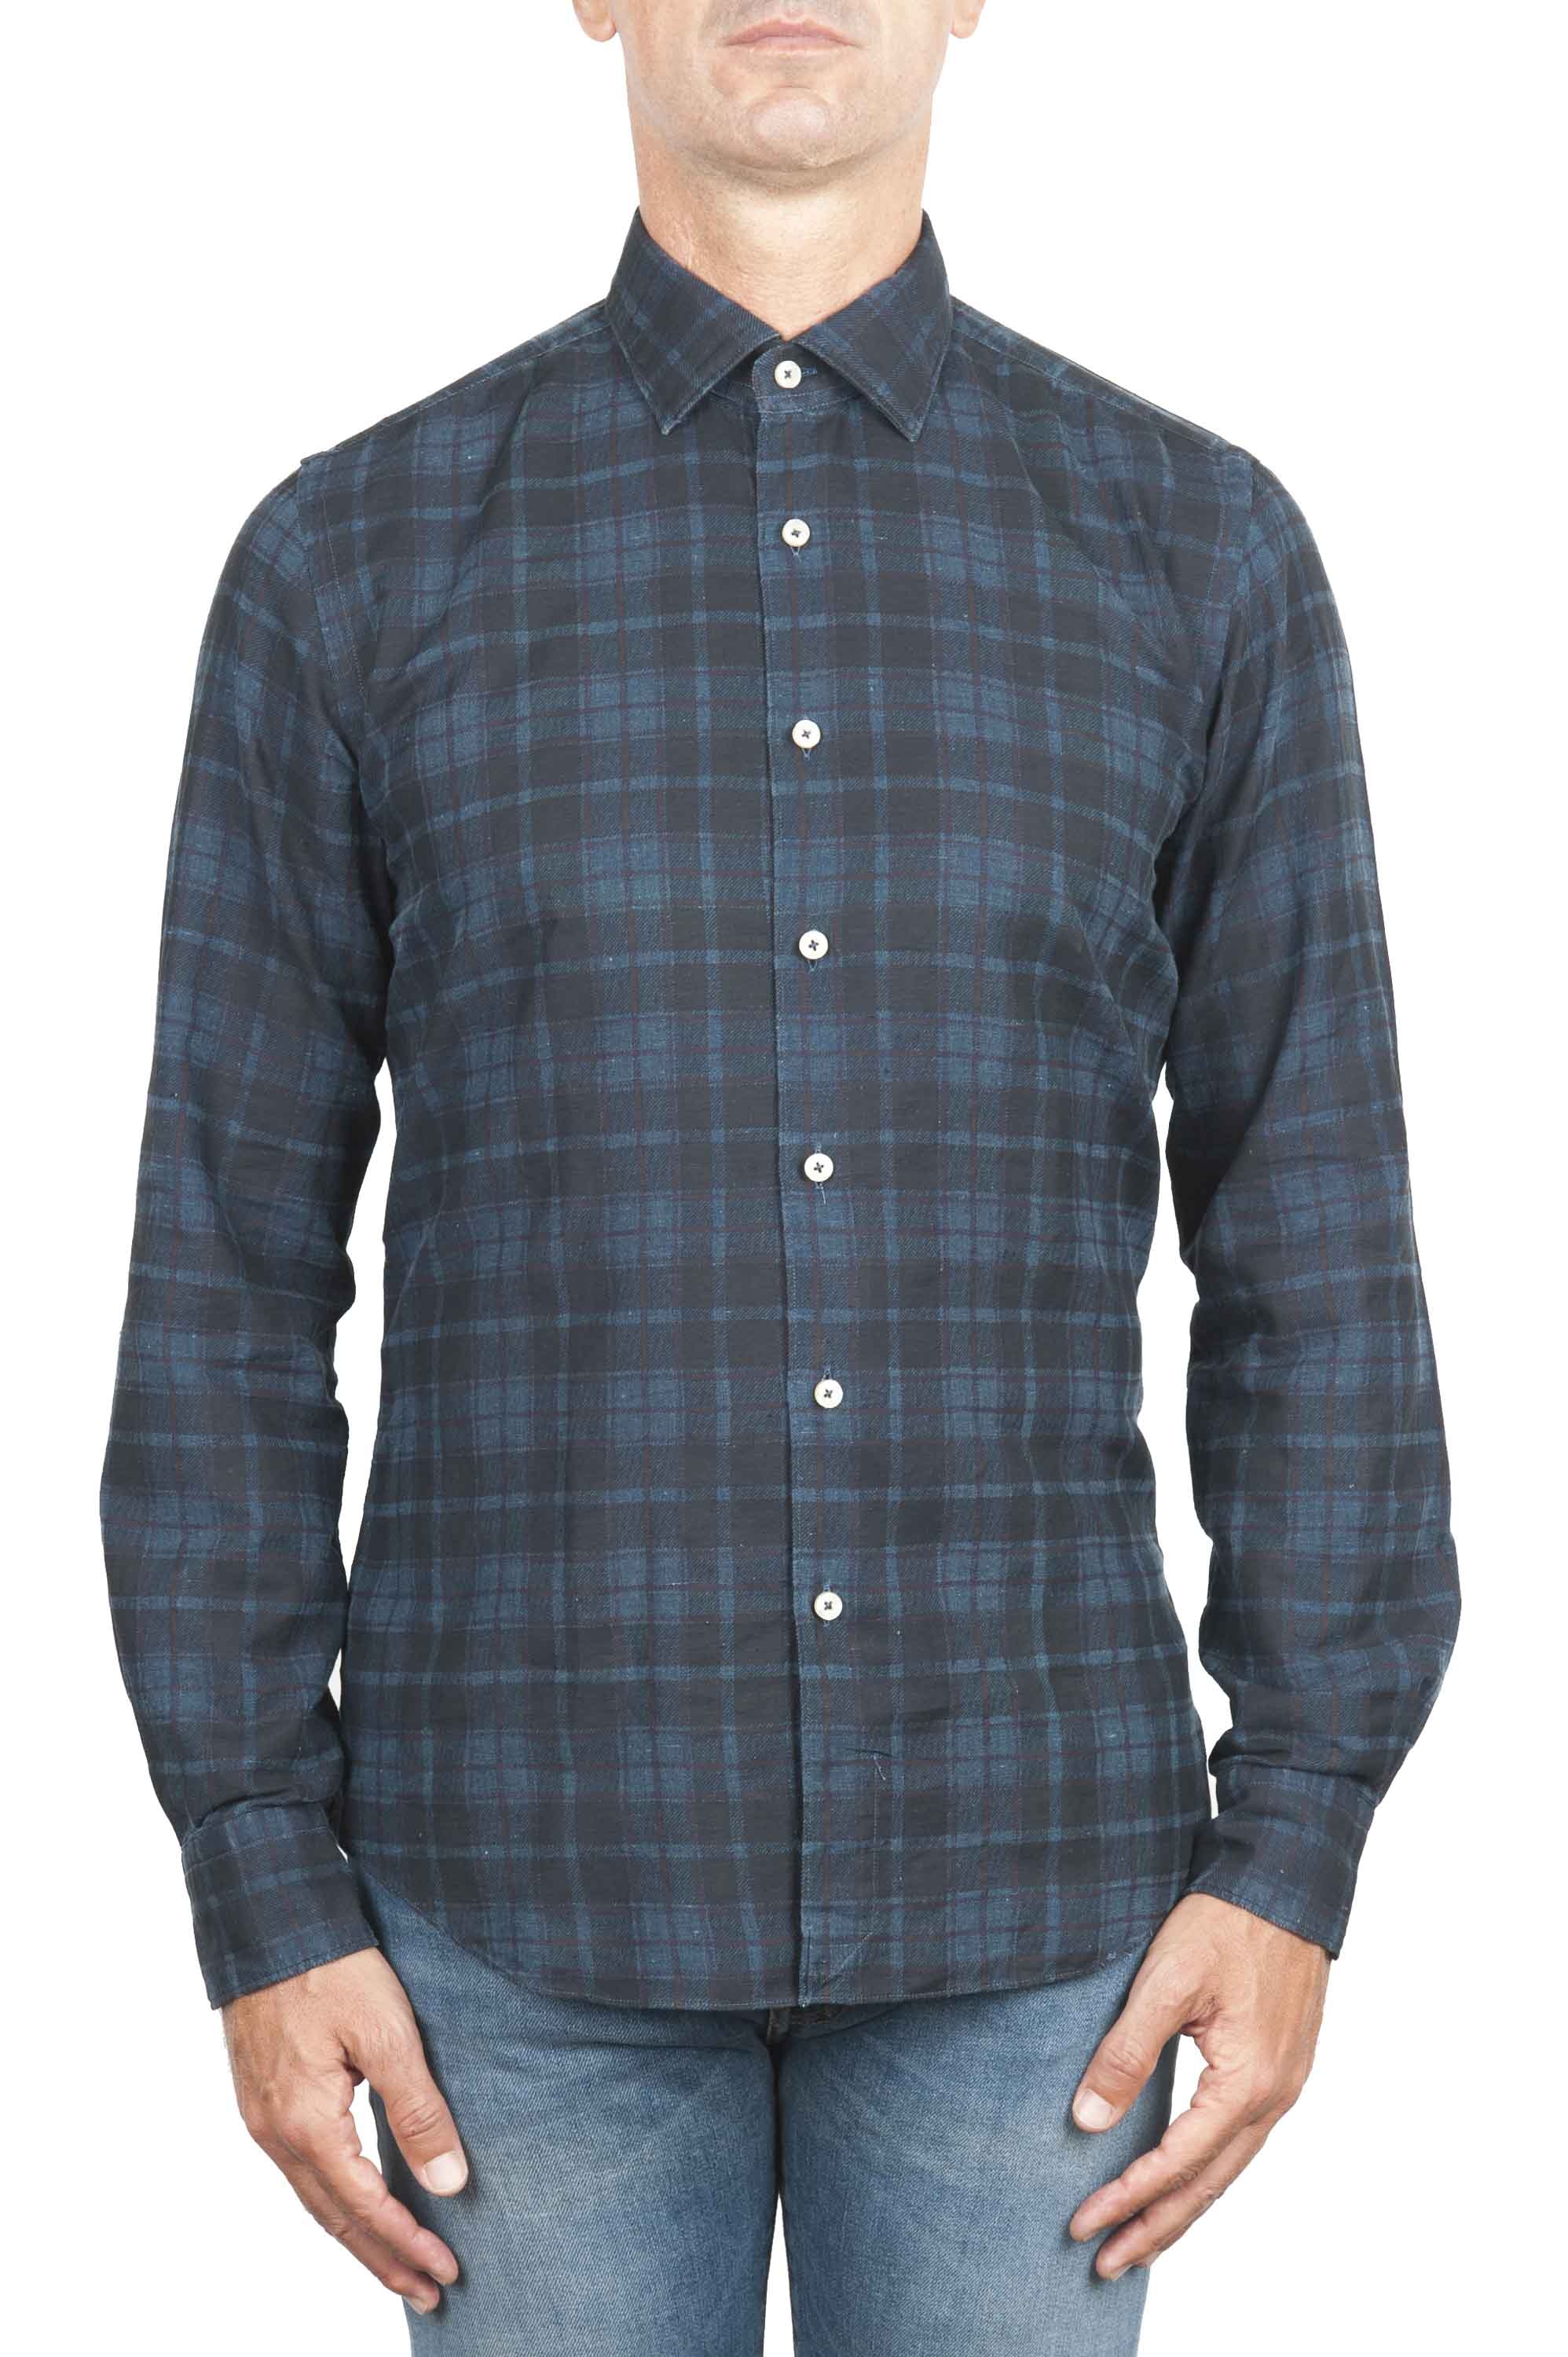 SBU 01305 チェック模様の青い綿のシャツ 01